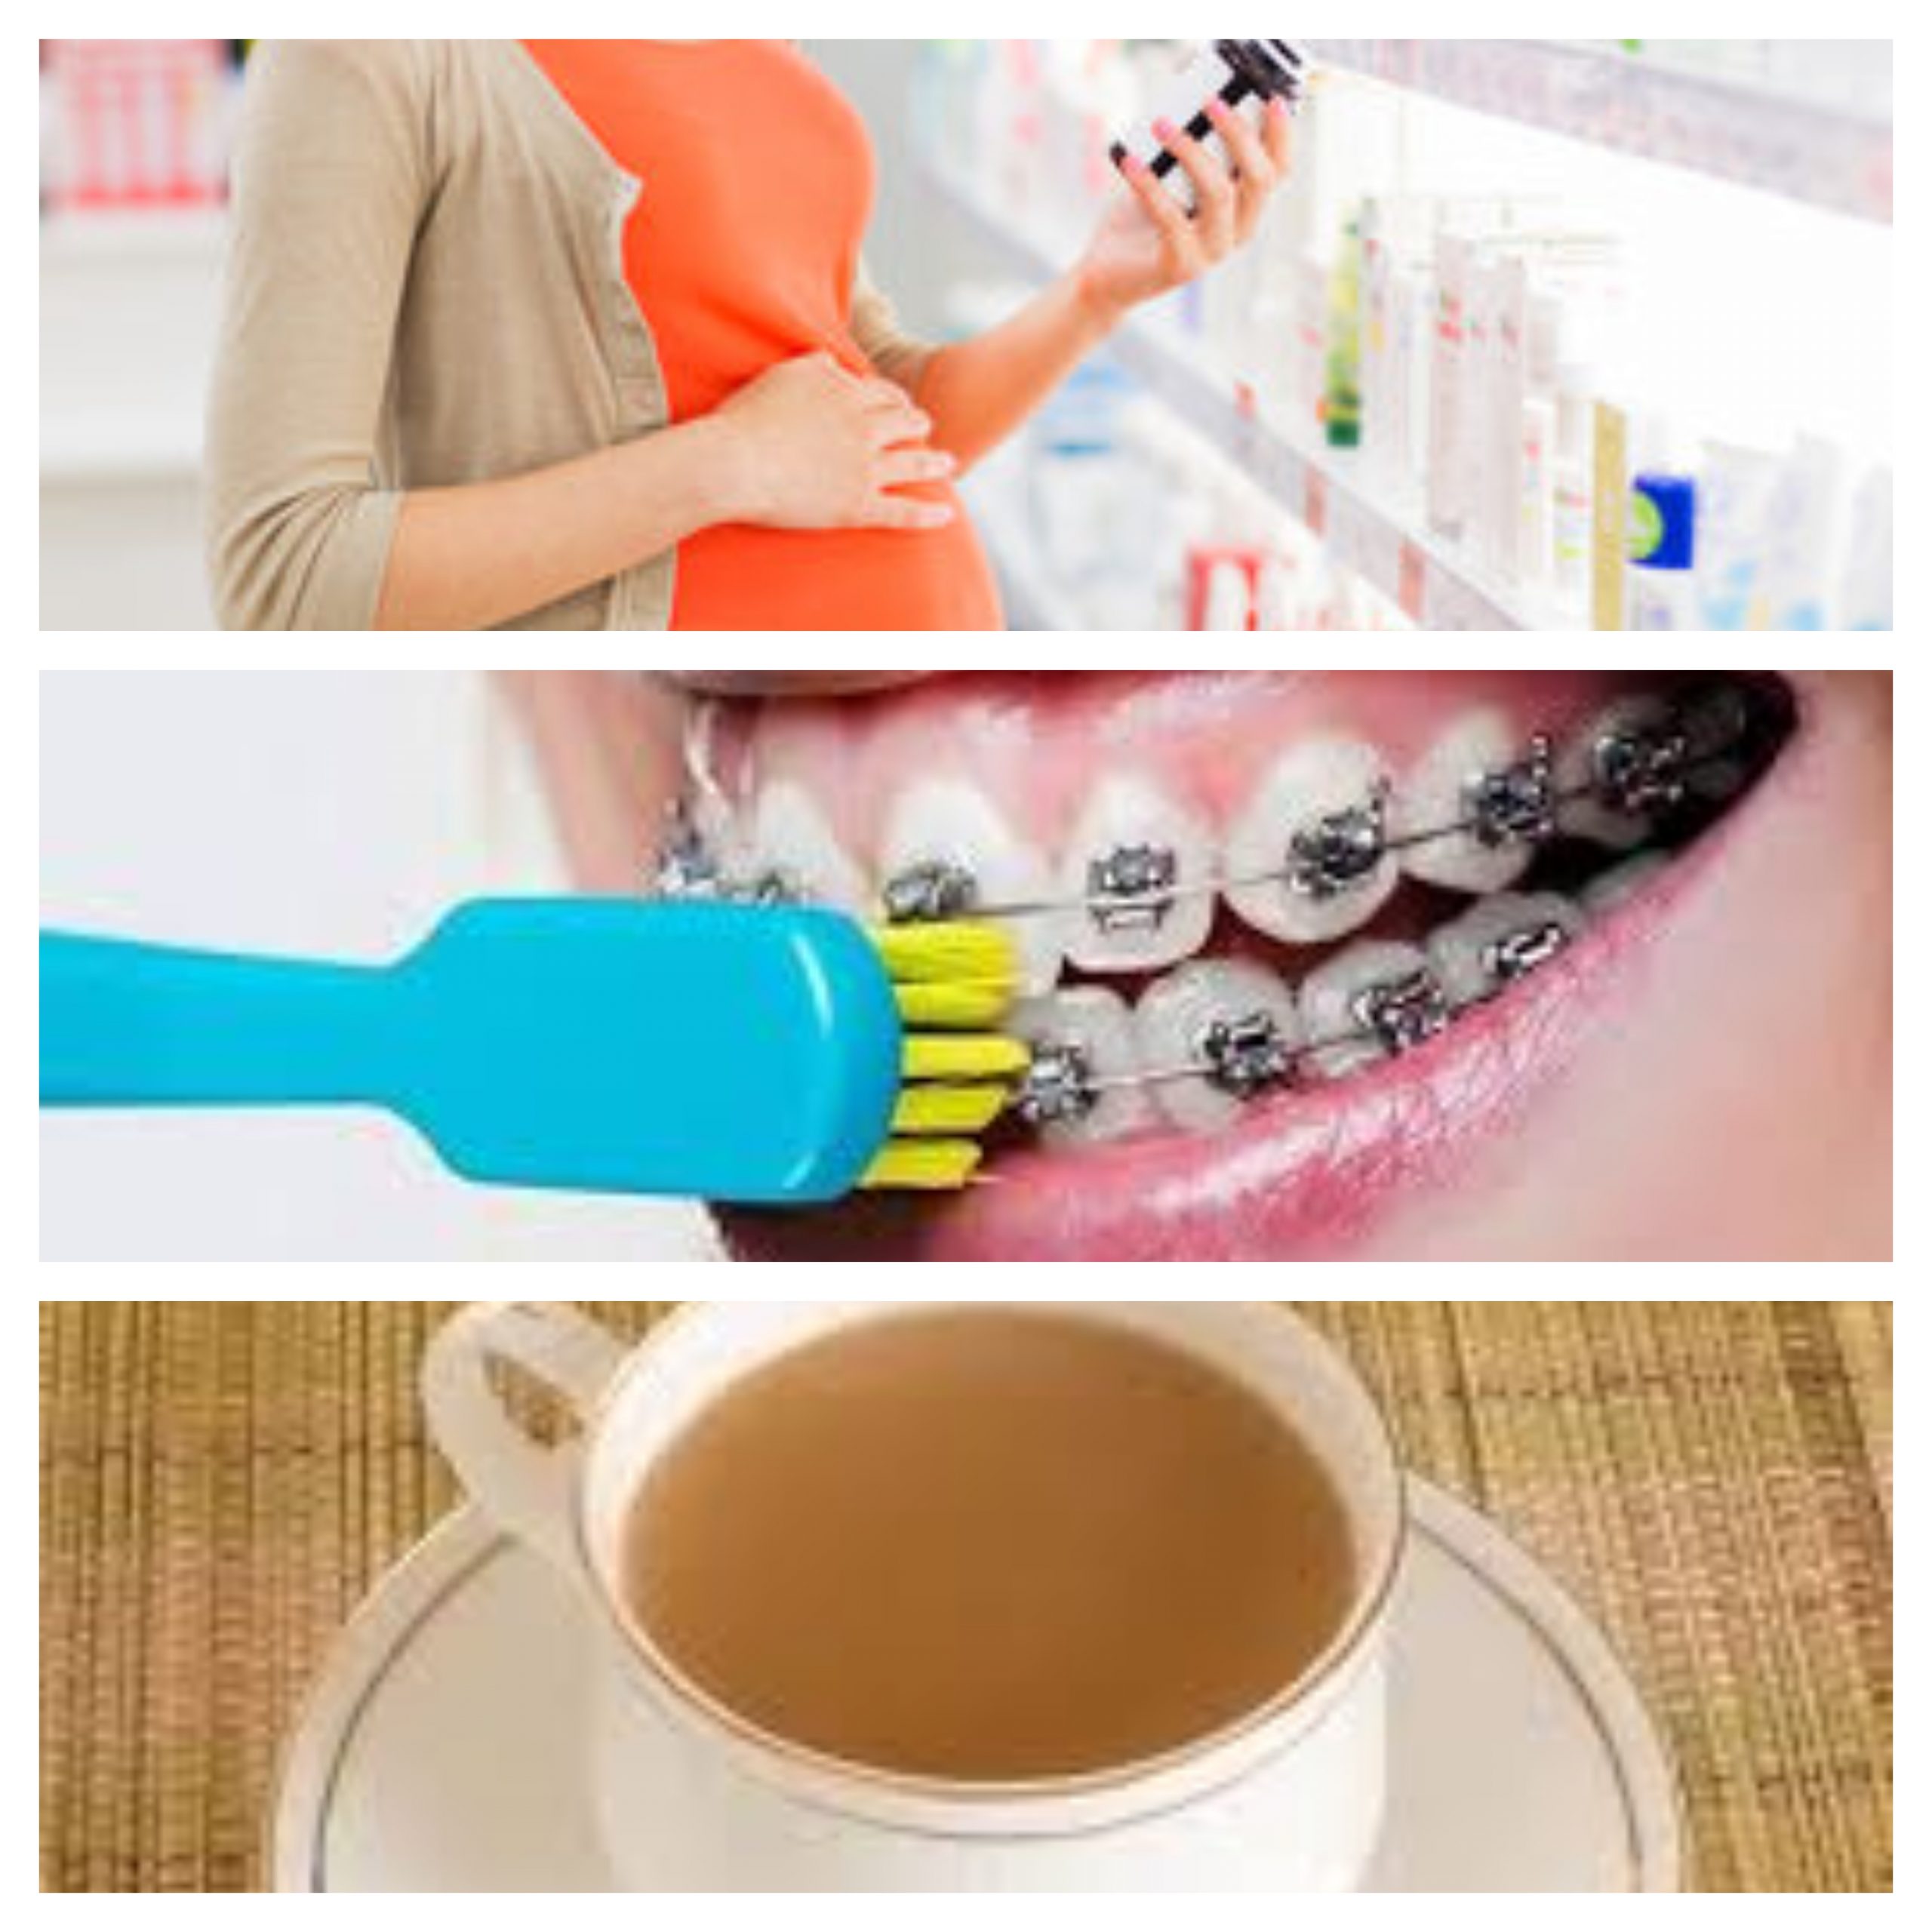 BELIEVE IT OR NOT: Antibiotics & Pregnancy, Oral Hygiene & Braces, Tea & Dryness